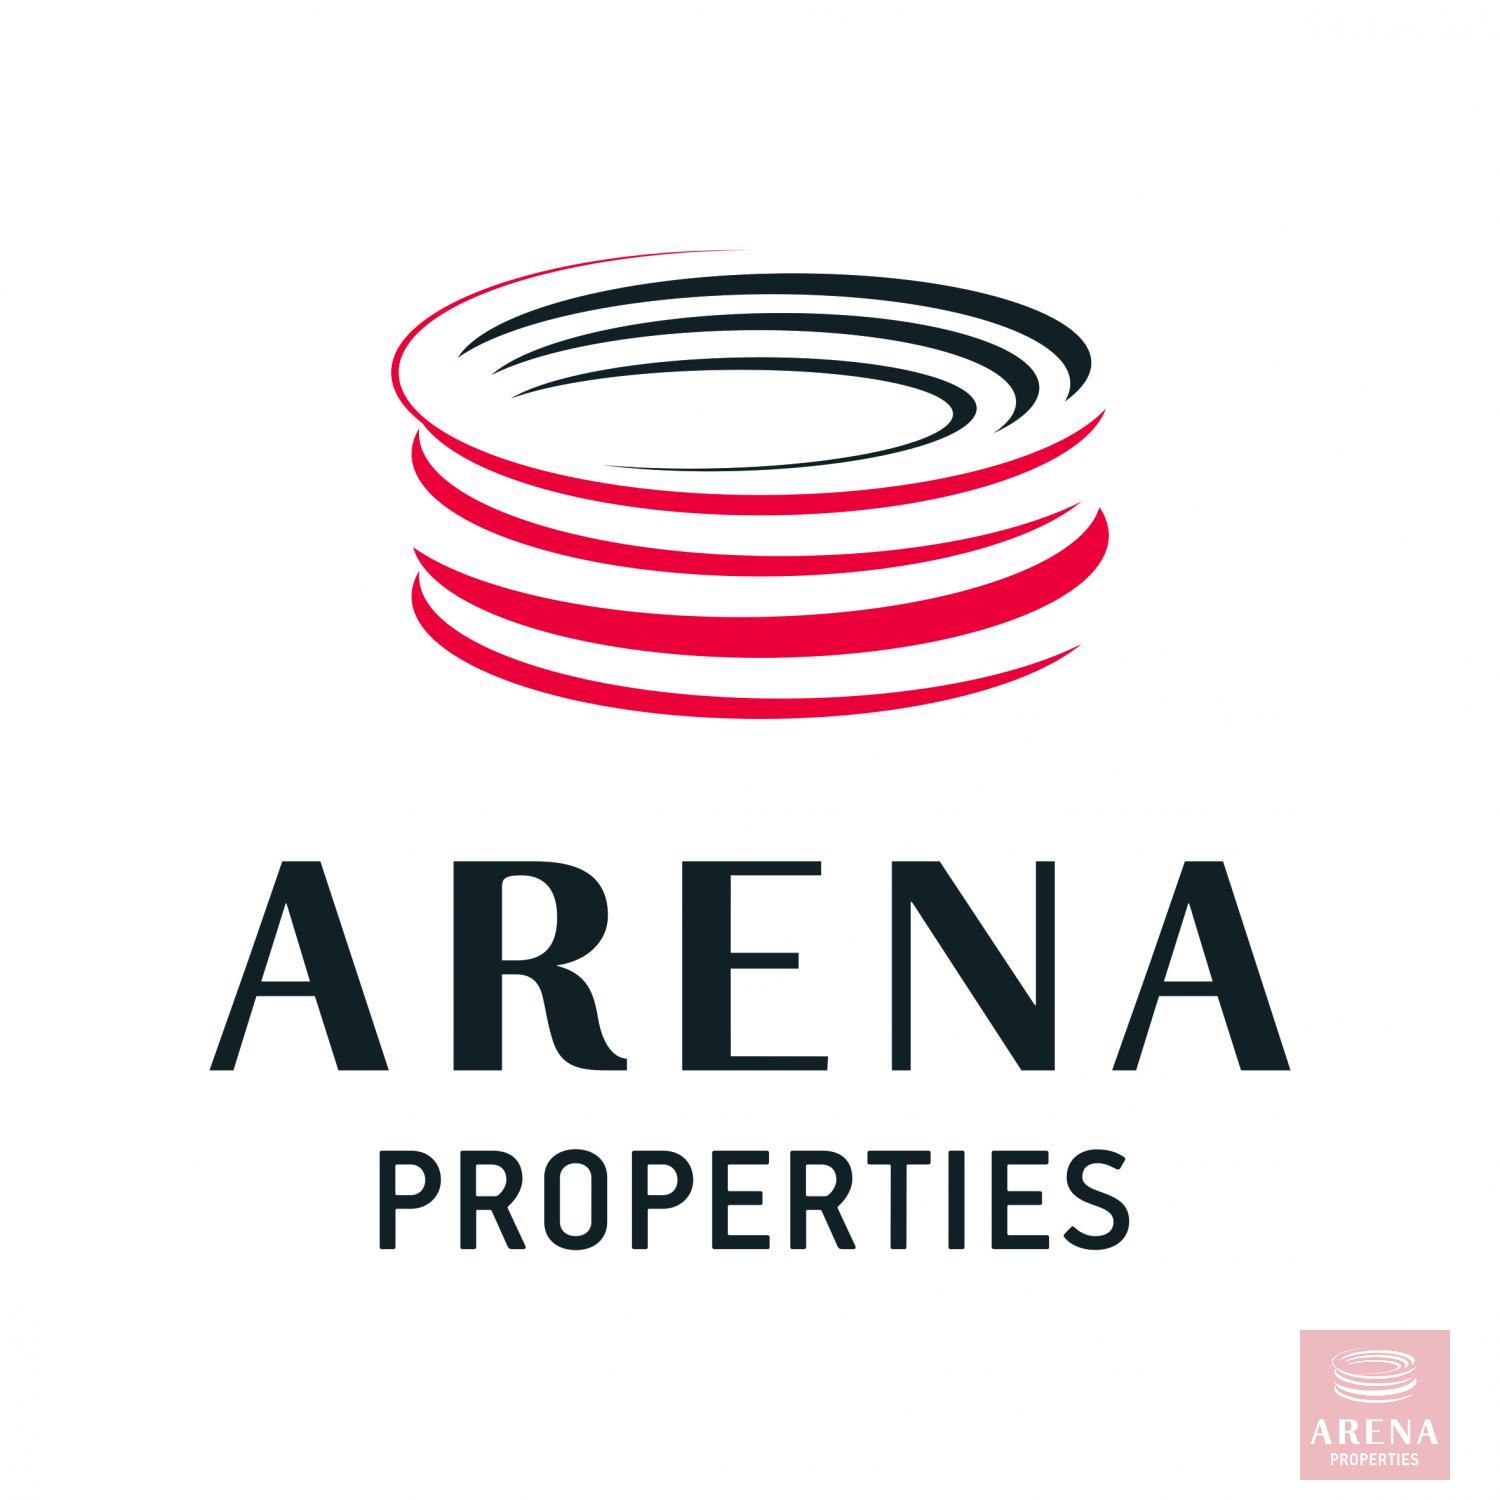 arena properties logo white